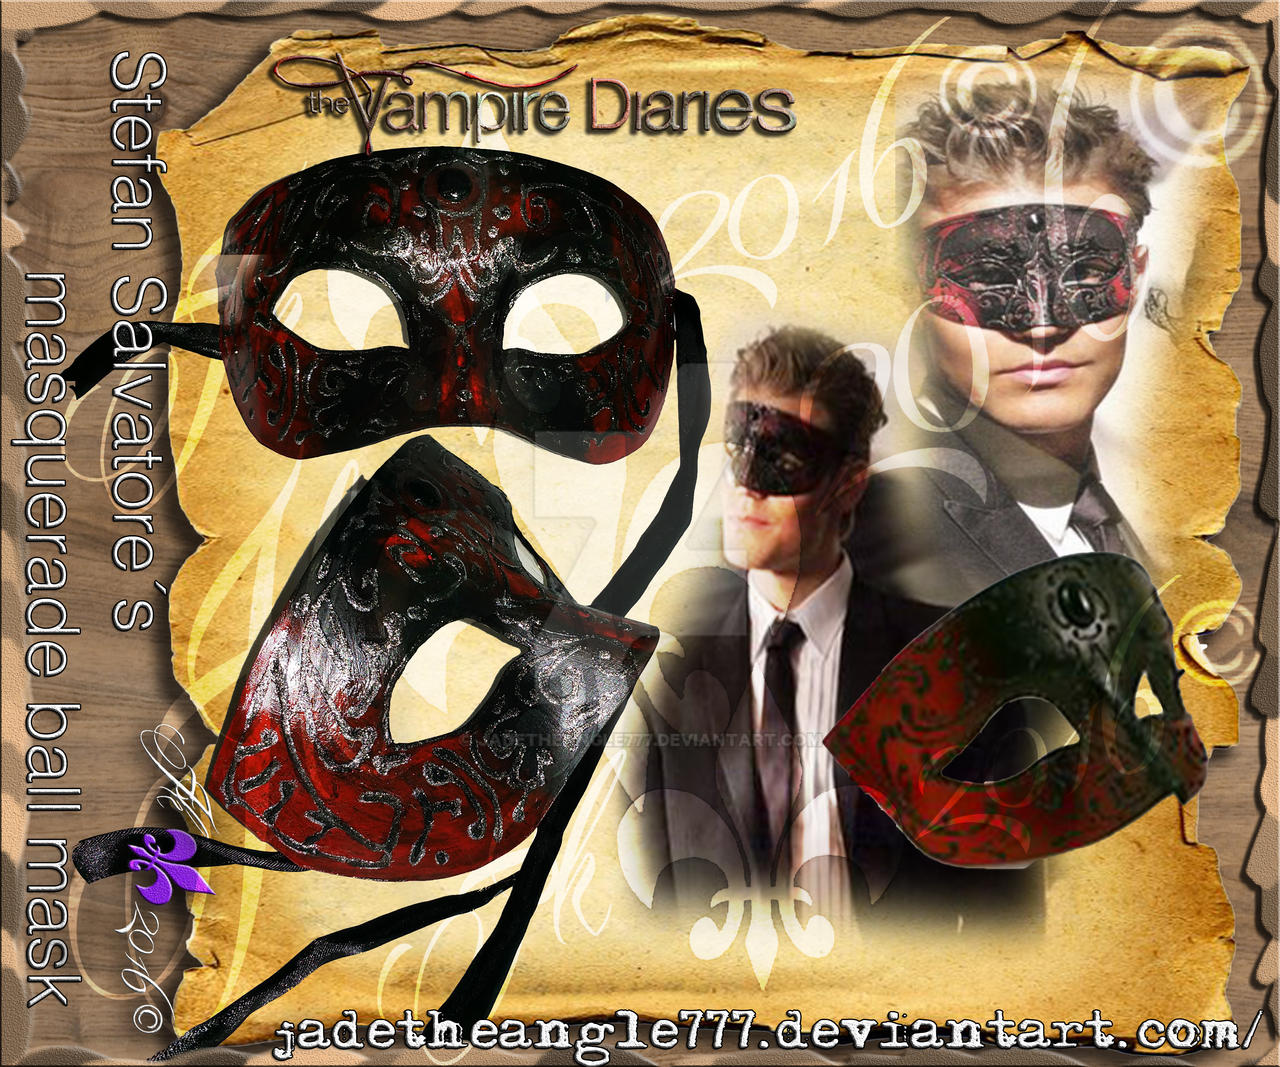 Where to buy Vampire Diaries masquerade masks